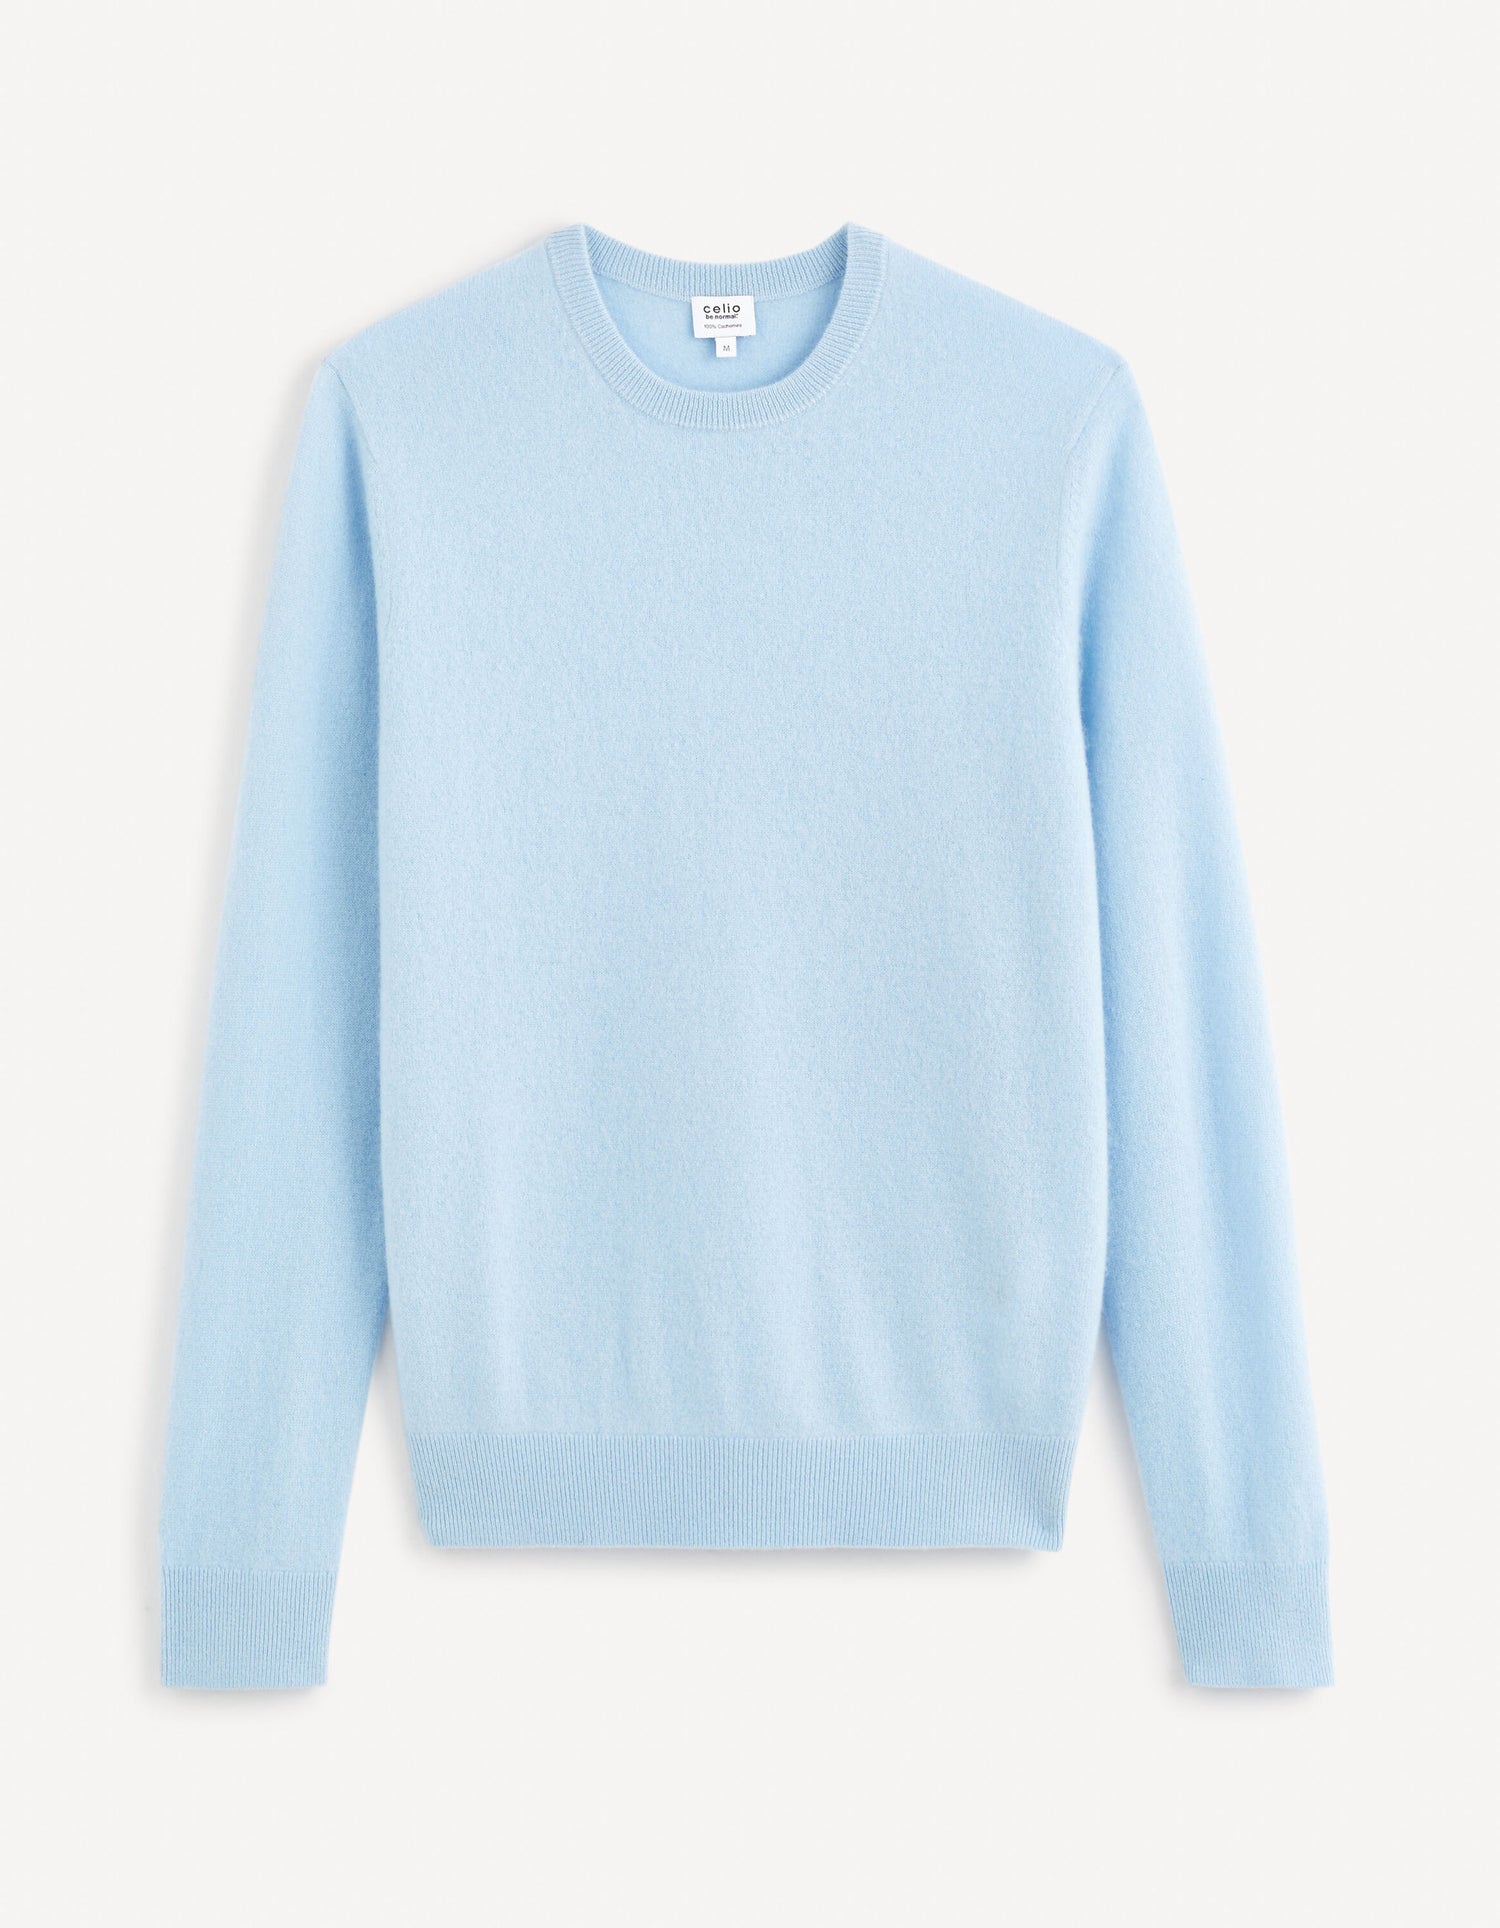 Round Neck Sweater 100% Cashmere_JECLOUD_LIGHT BLUE_01